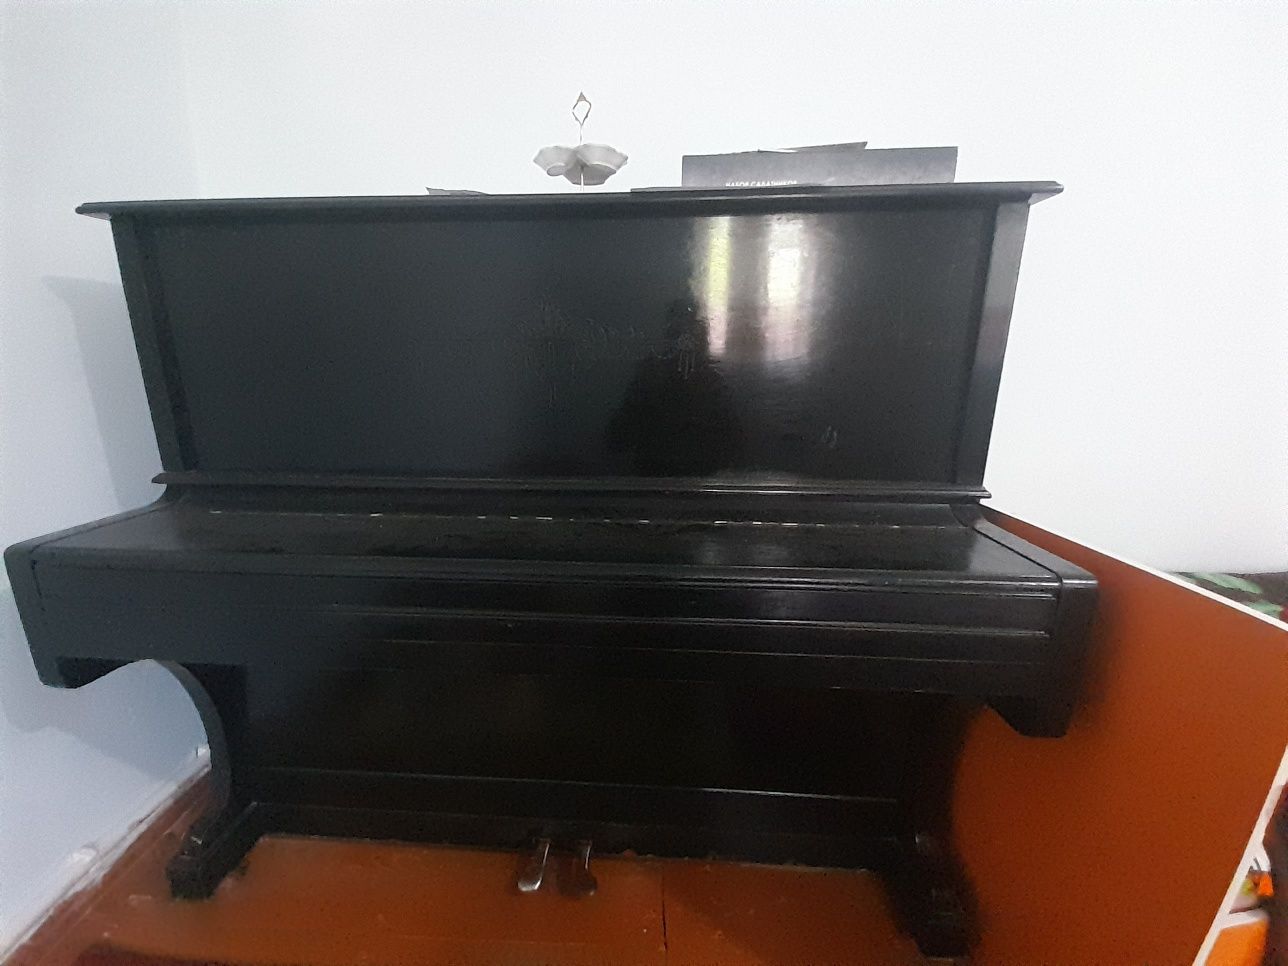 Pianino satıladi